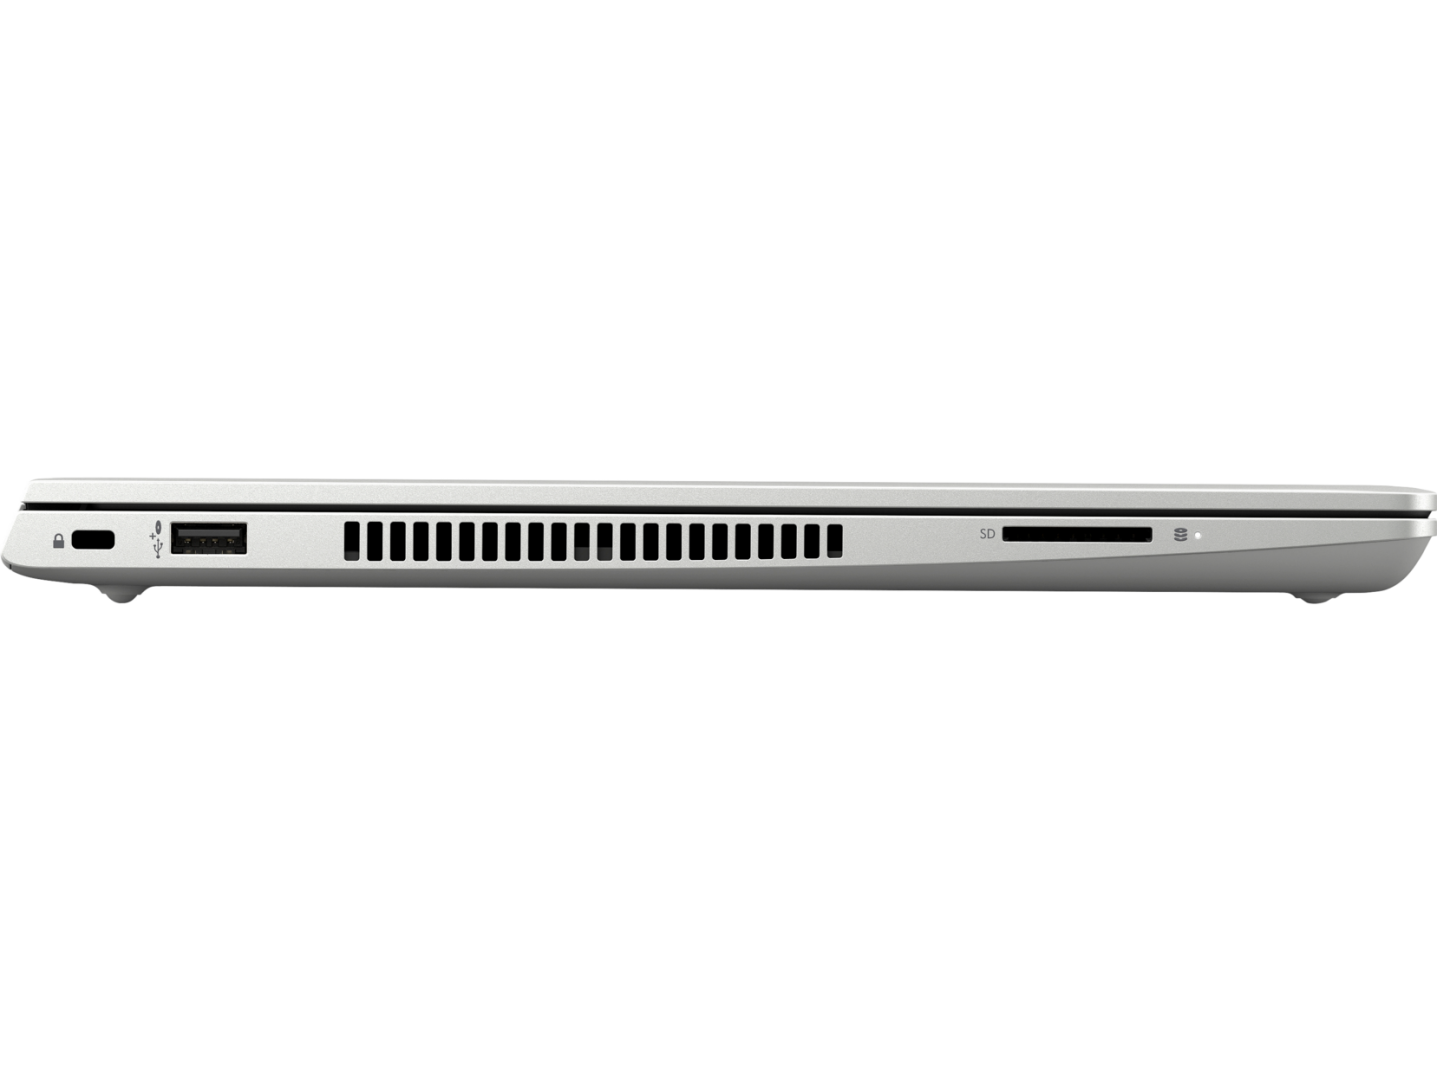 Laptop HP ProBook 445 G7, 14" LED FHD, AMD Ryzen 3 4300U, RAM 8GB, SSD 256GB , Windows 10 PRO 64bit